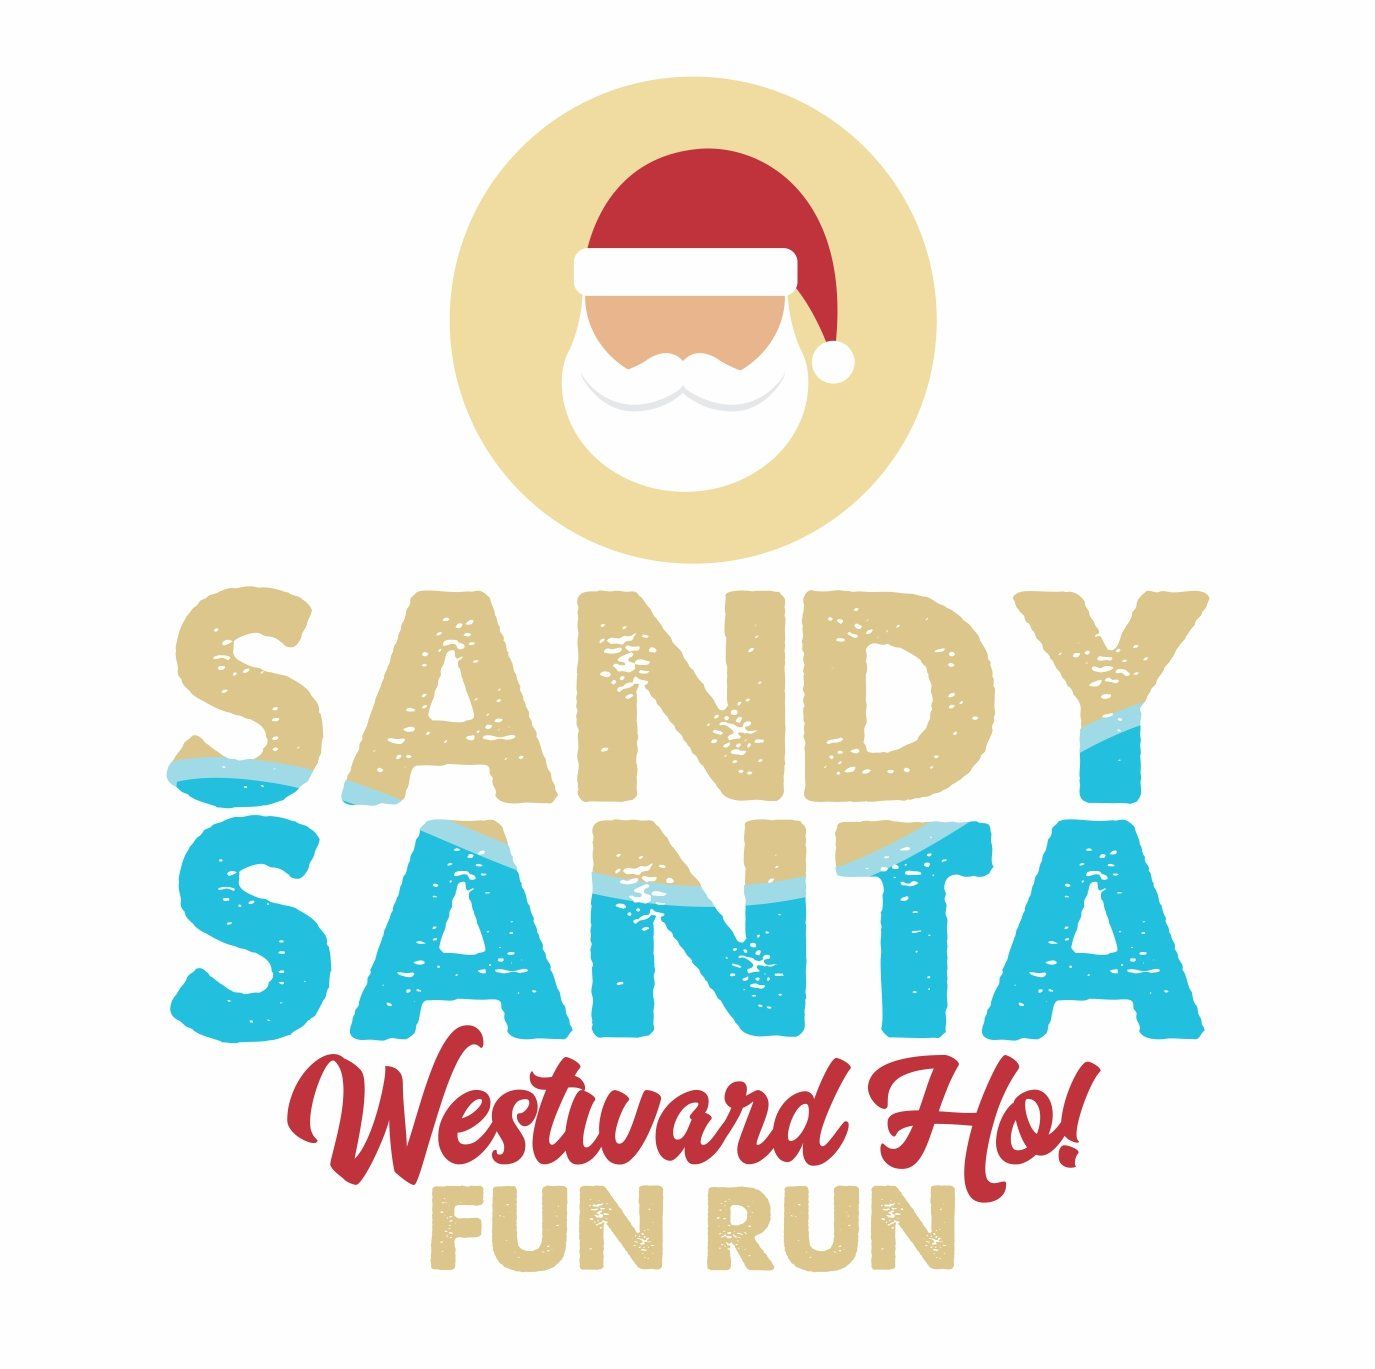 Westward Ho! Sandy Santa Fun Run on the beach